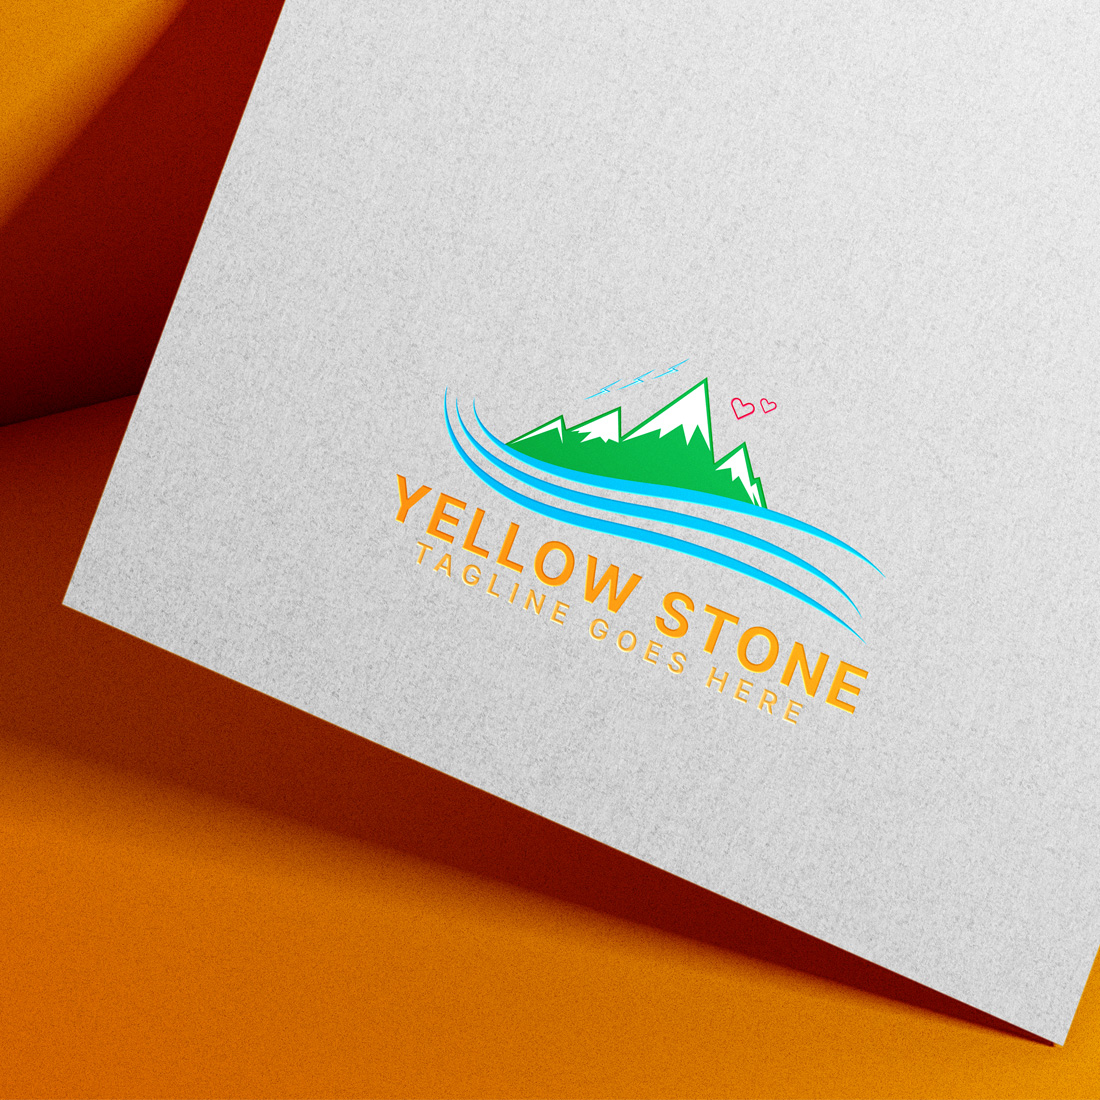 yellowstone logo sample 07 1